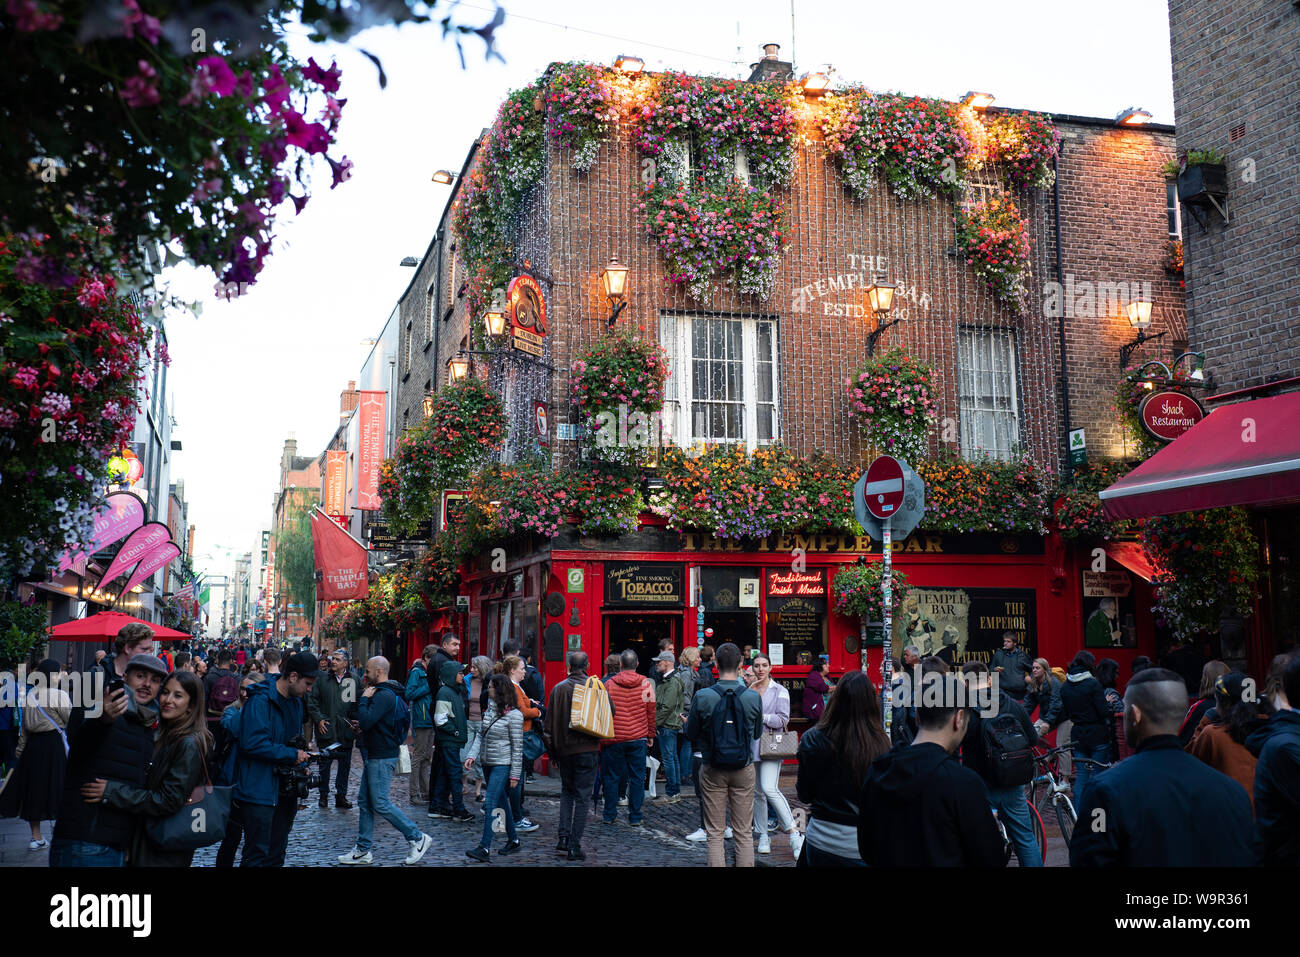 Temple Bar, Dublin, Irland Stockfoto